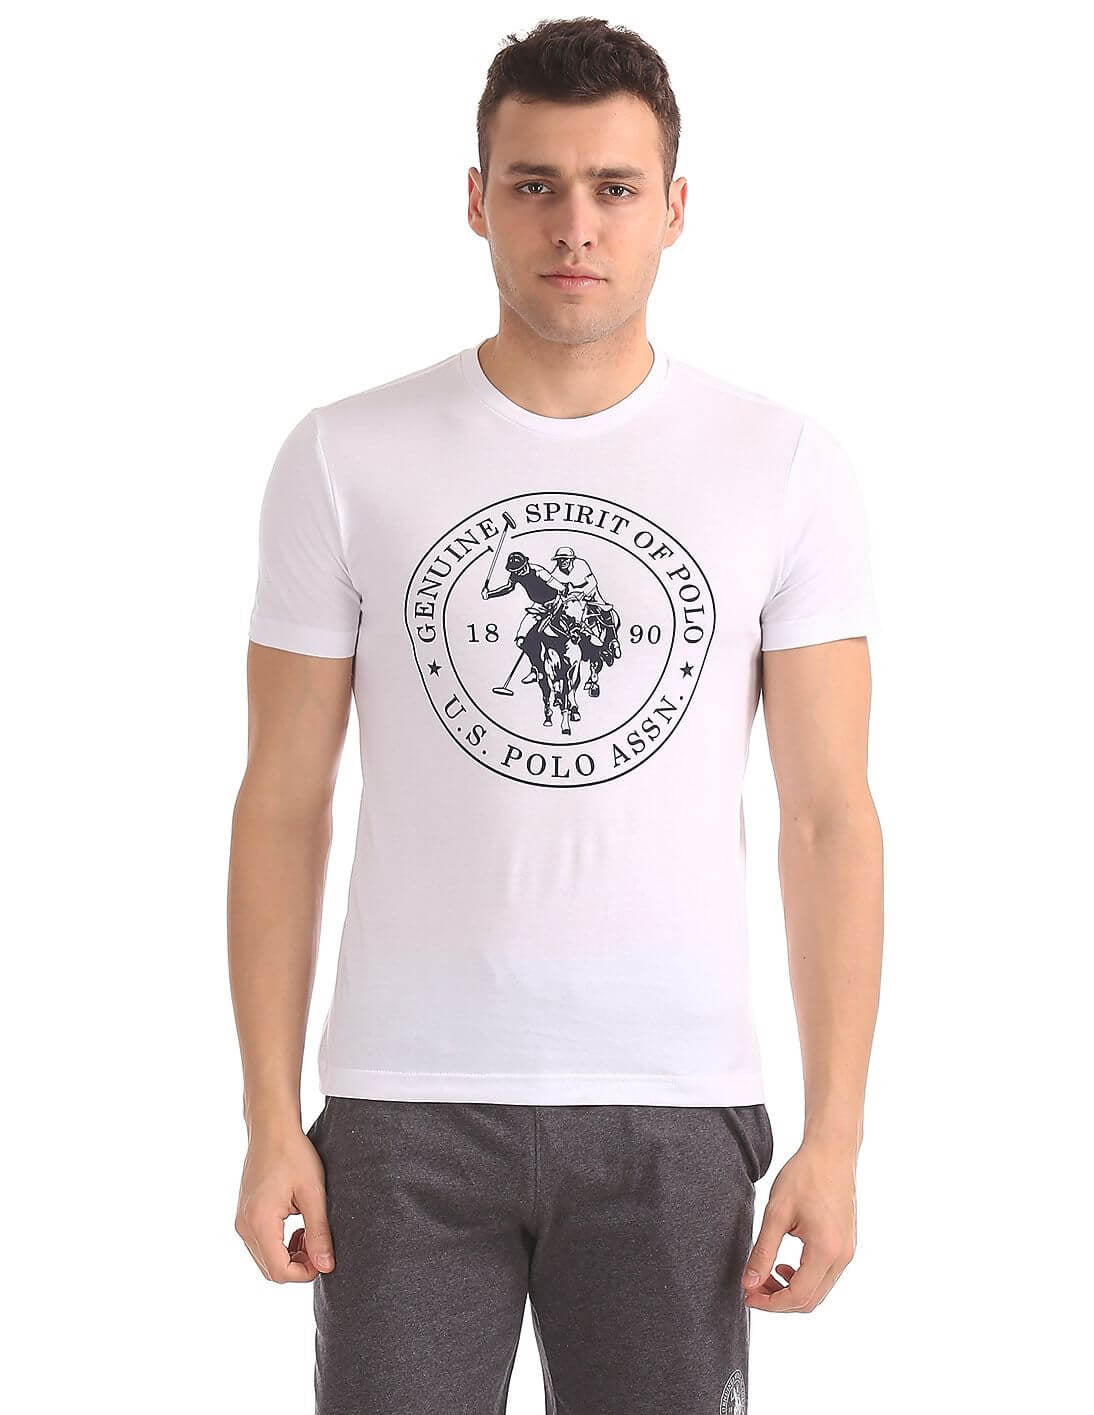 U S Polo Assn White Graphic Tshirt #I643